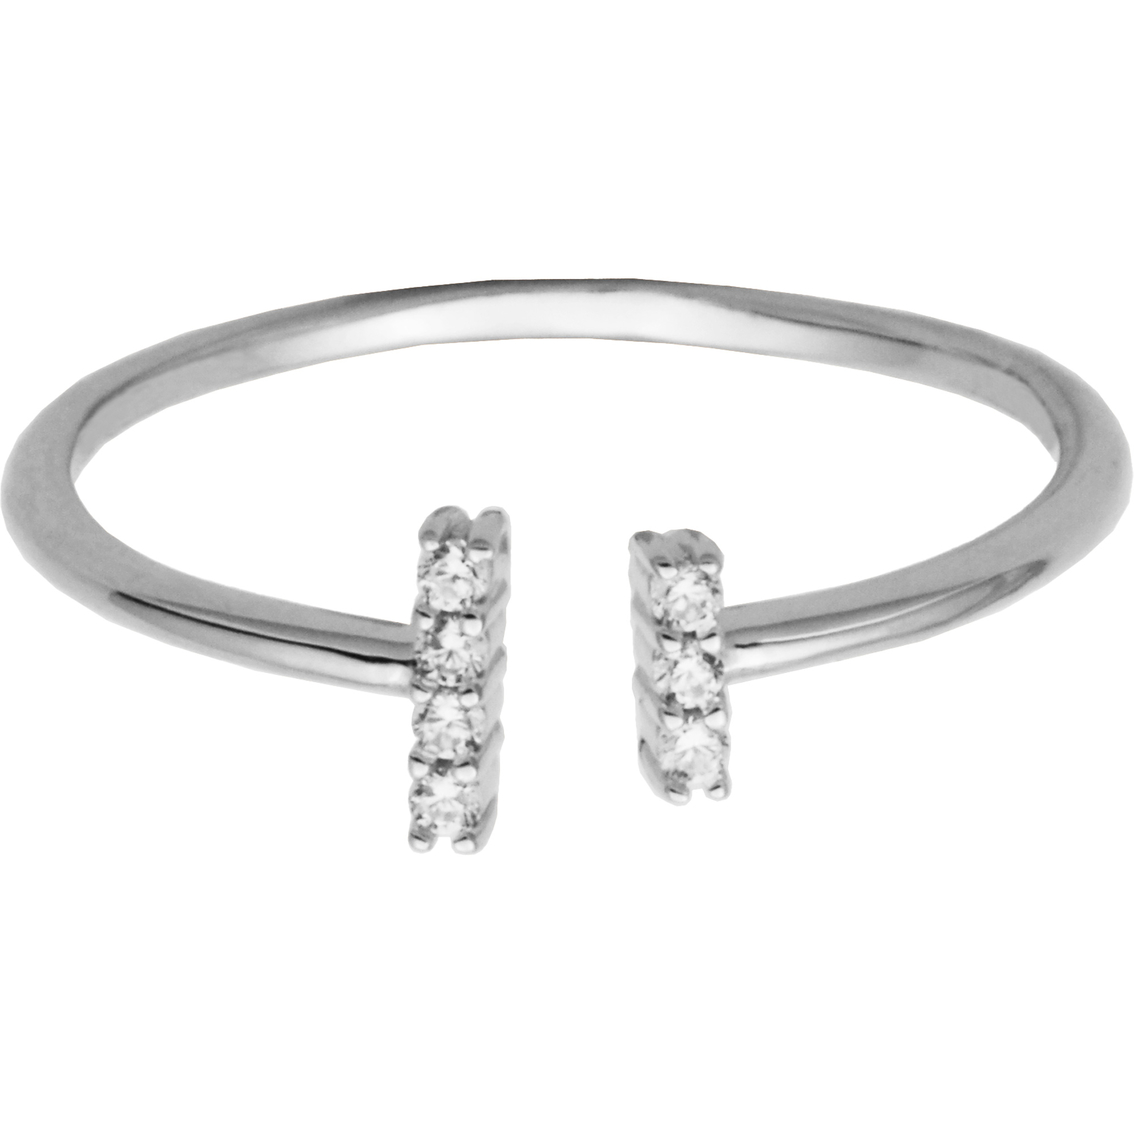 Paj Sterling Silver Cubic Zirconia Ring Size 7 | Fashion Rings ...